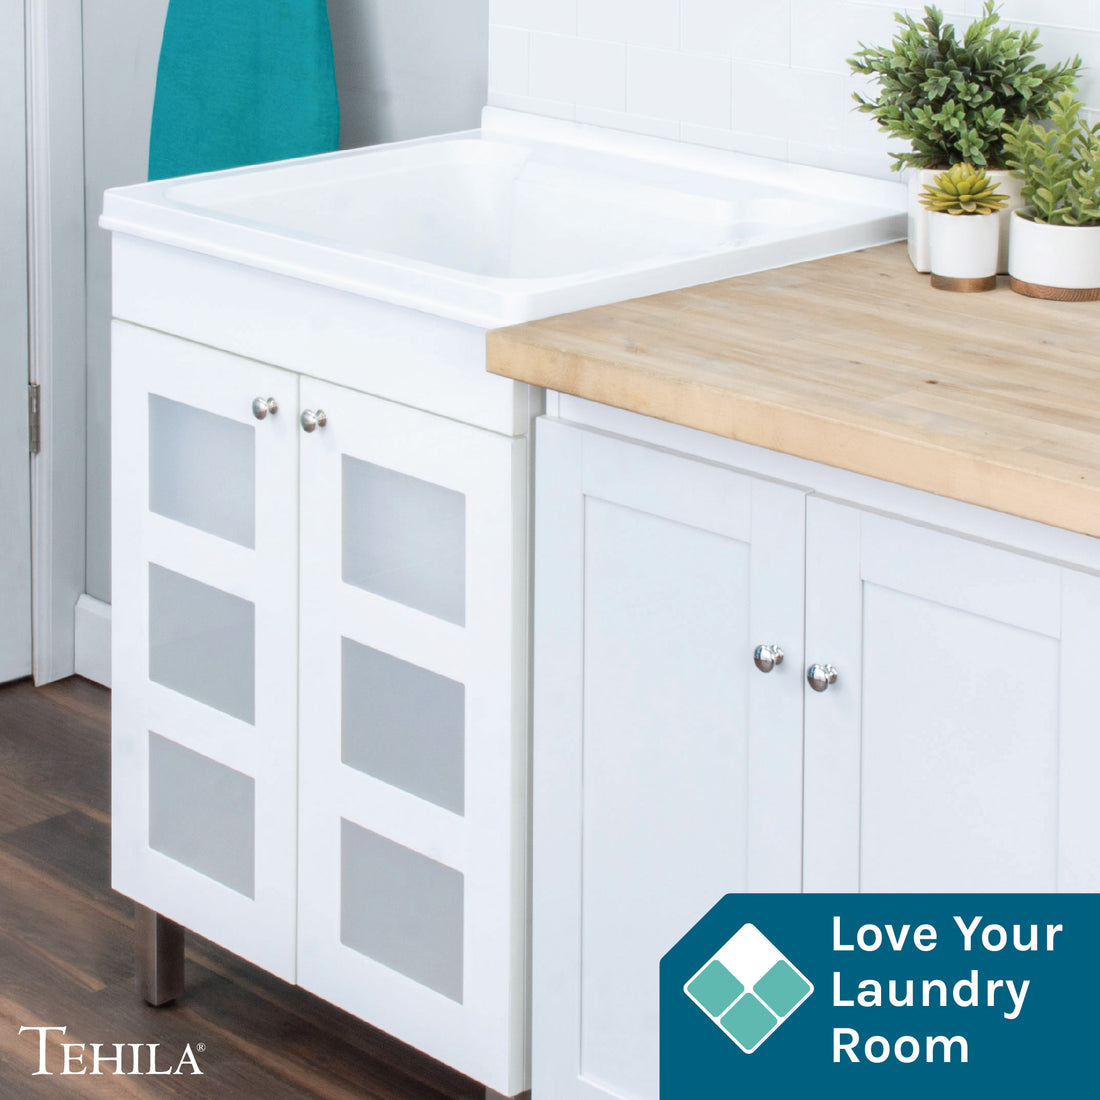 Tehila - Love Your Laundry Room